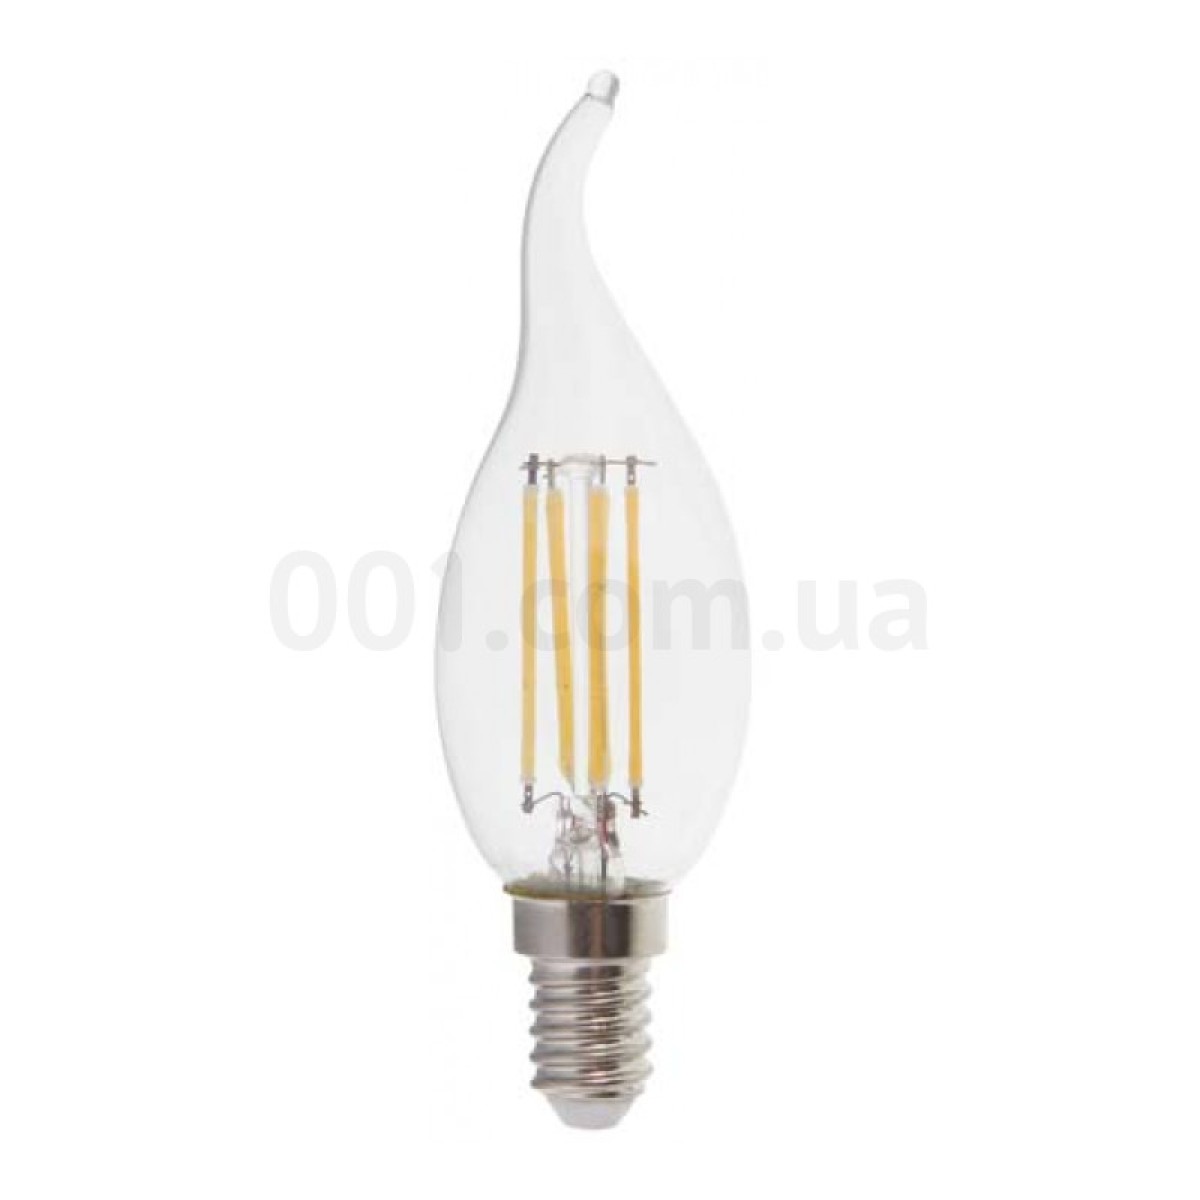 Светодиодная лампа LB-159 CF37 (свеча на ветру) филамент 6Вт 2700K E14, Feron 256_256.jpg